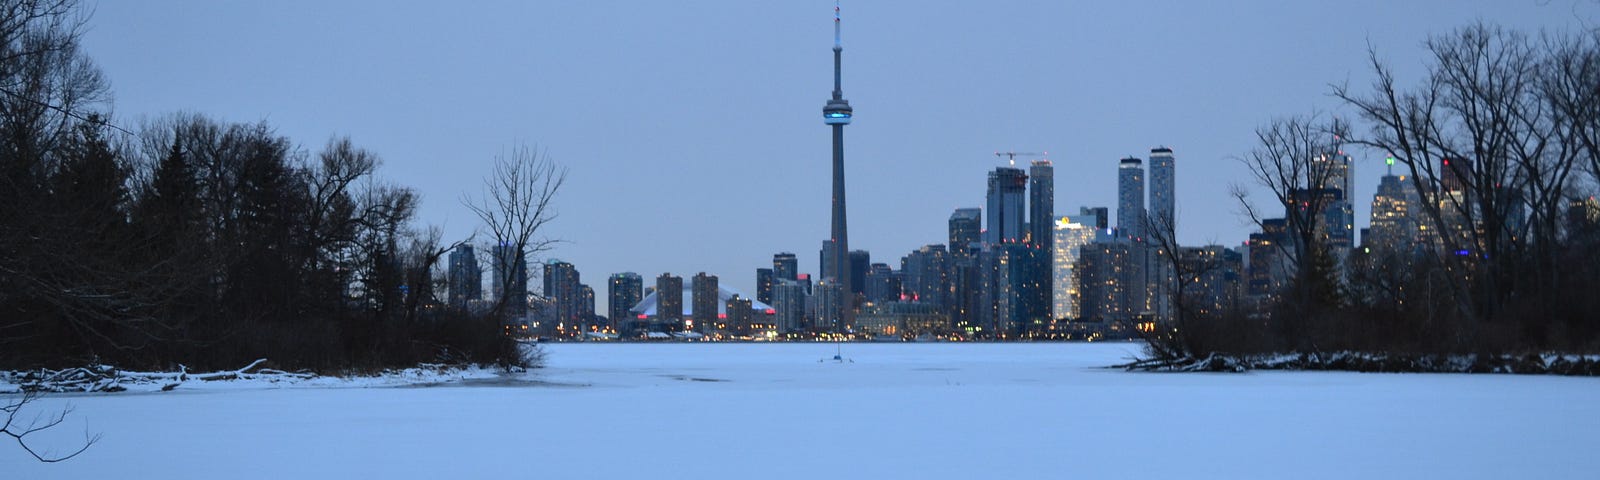 CN tower against a white snowy skyline